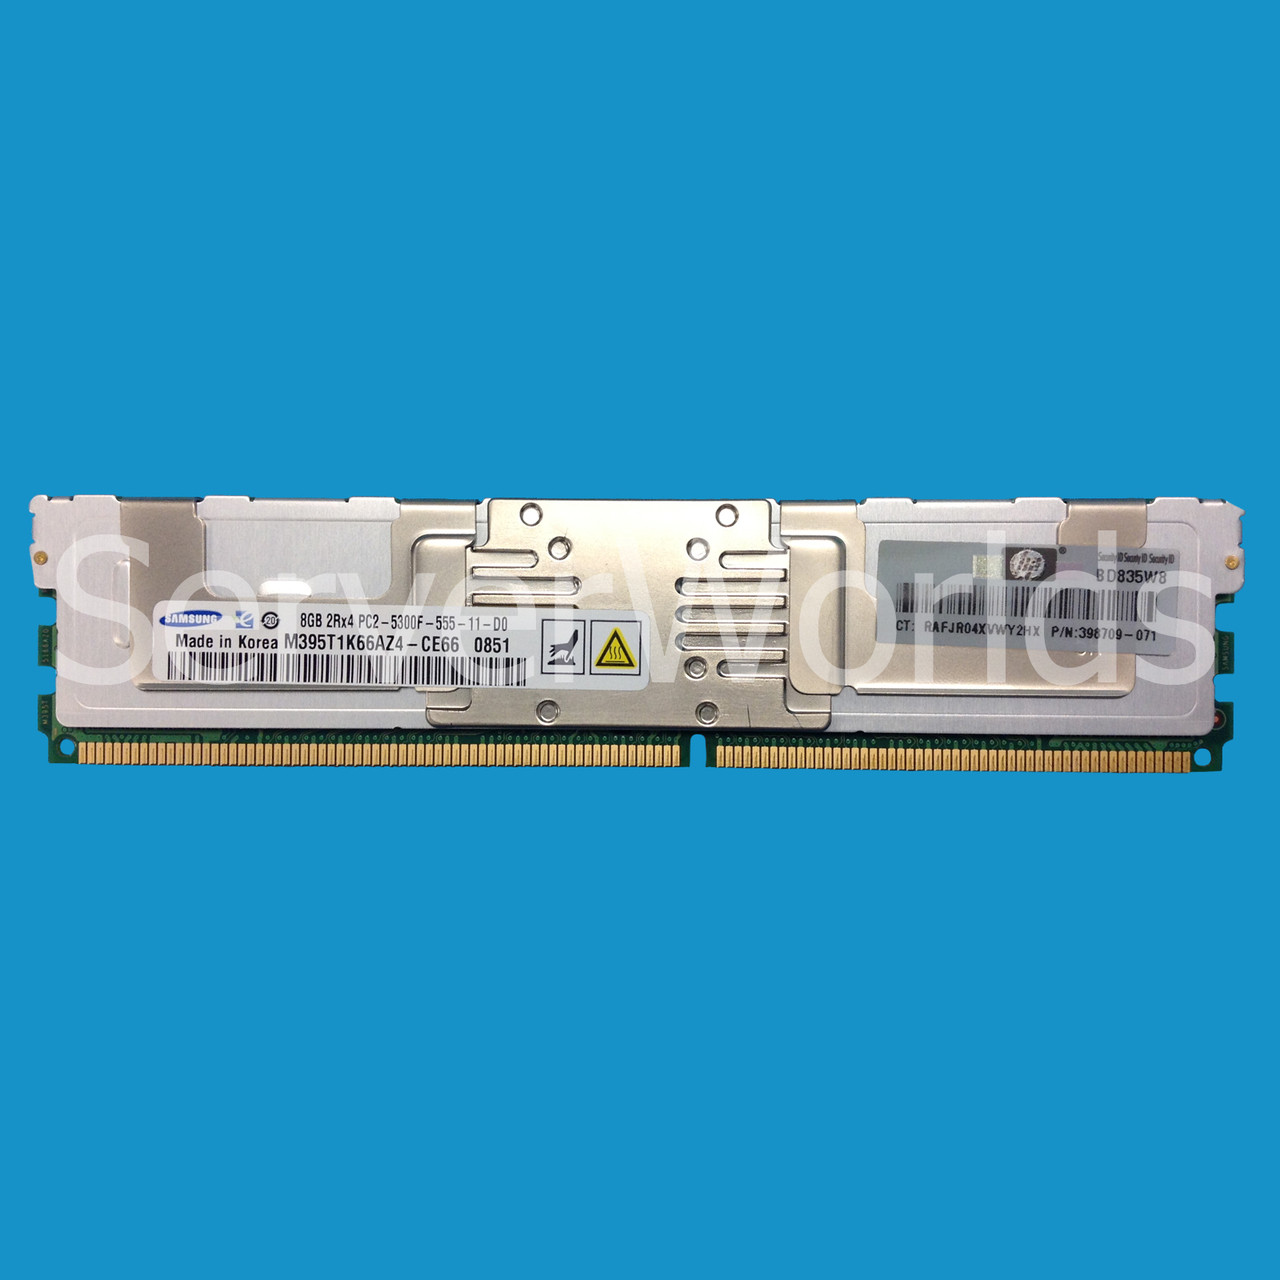 HP 398709-071 8GB PC2-5300 DDR2 Memory Module 416474-001